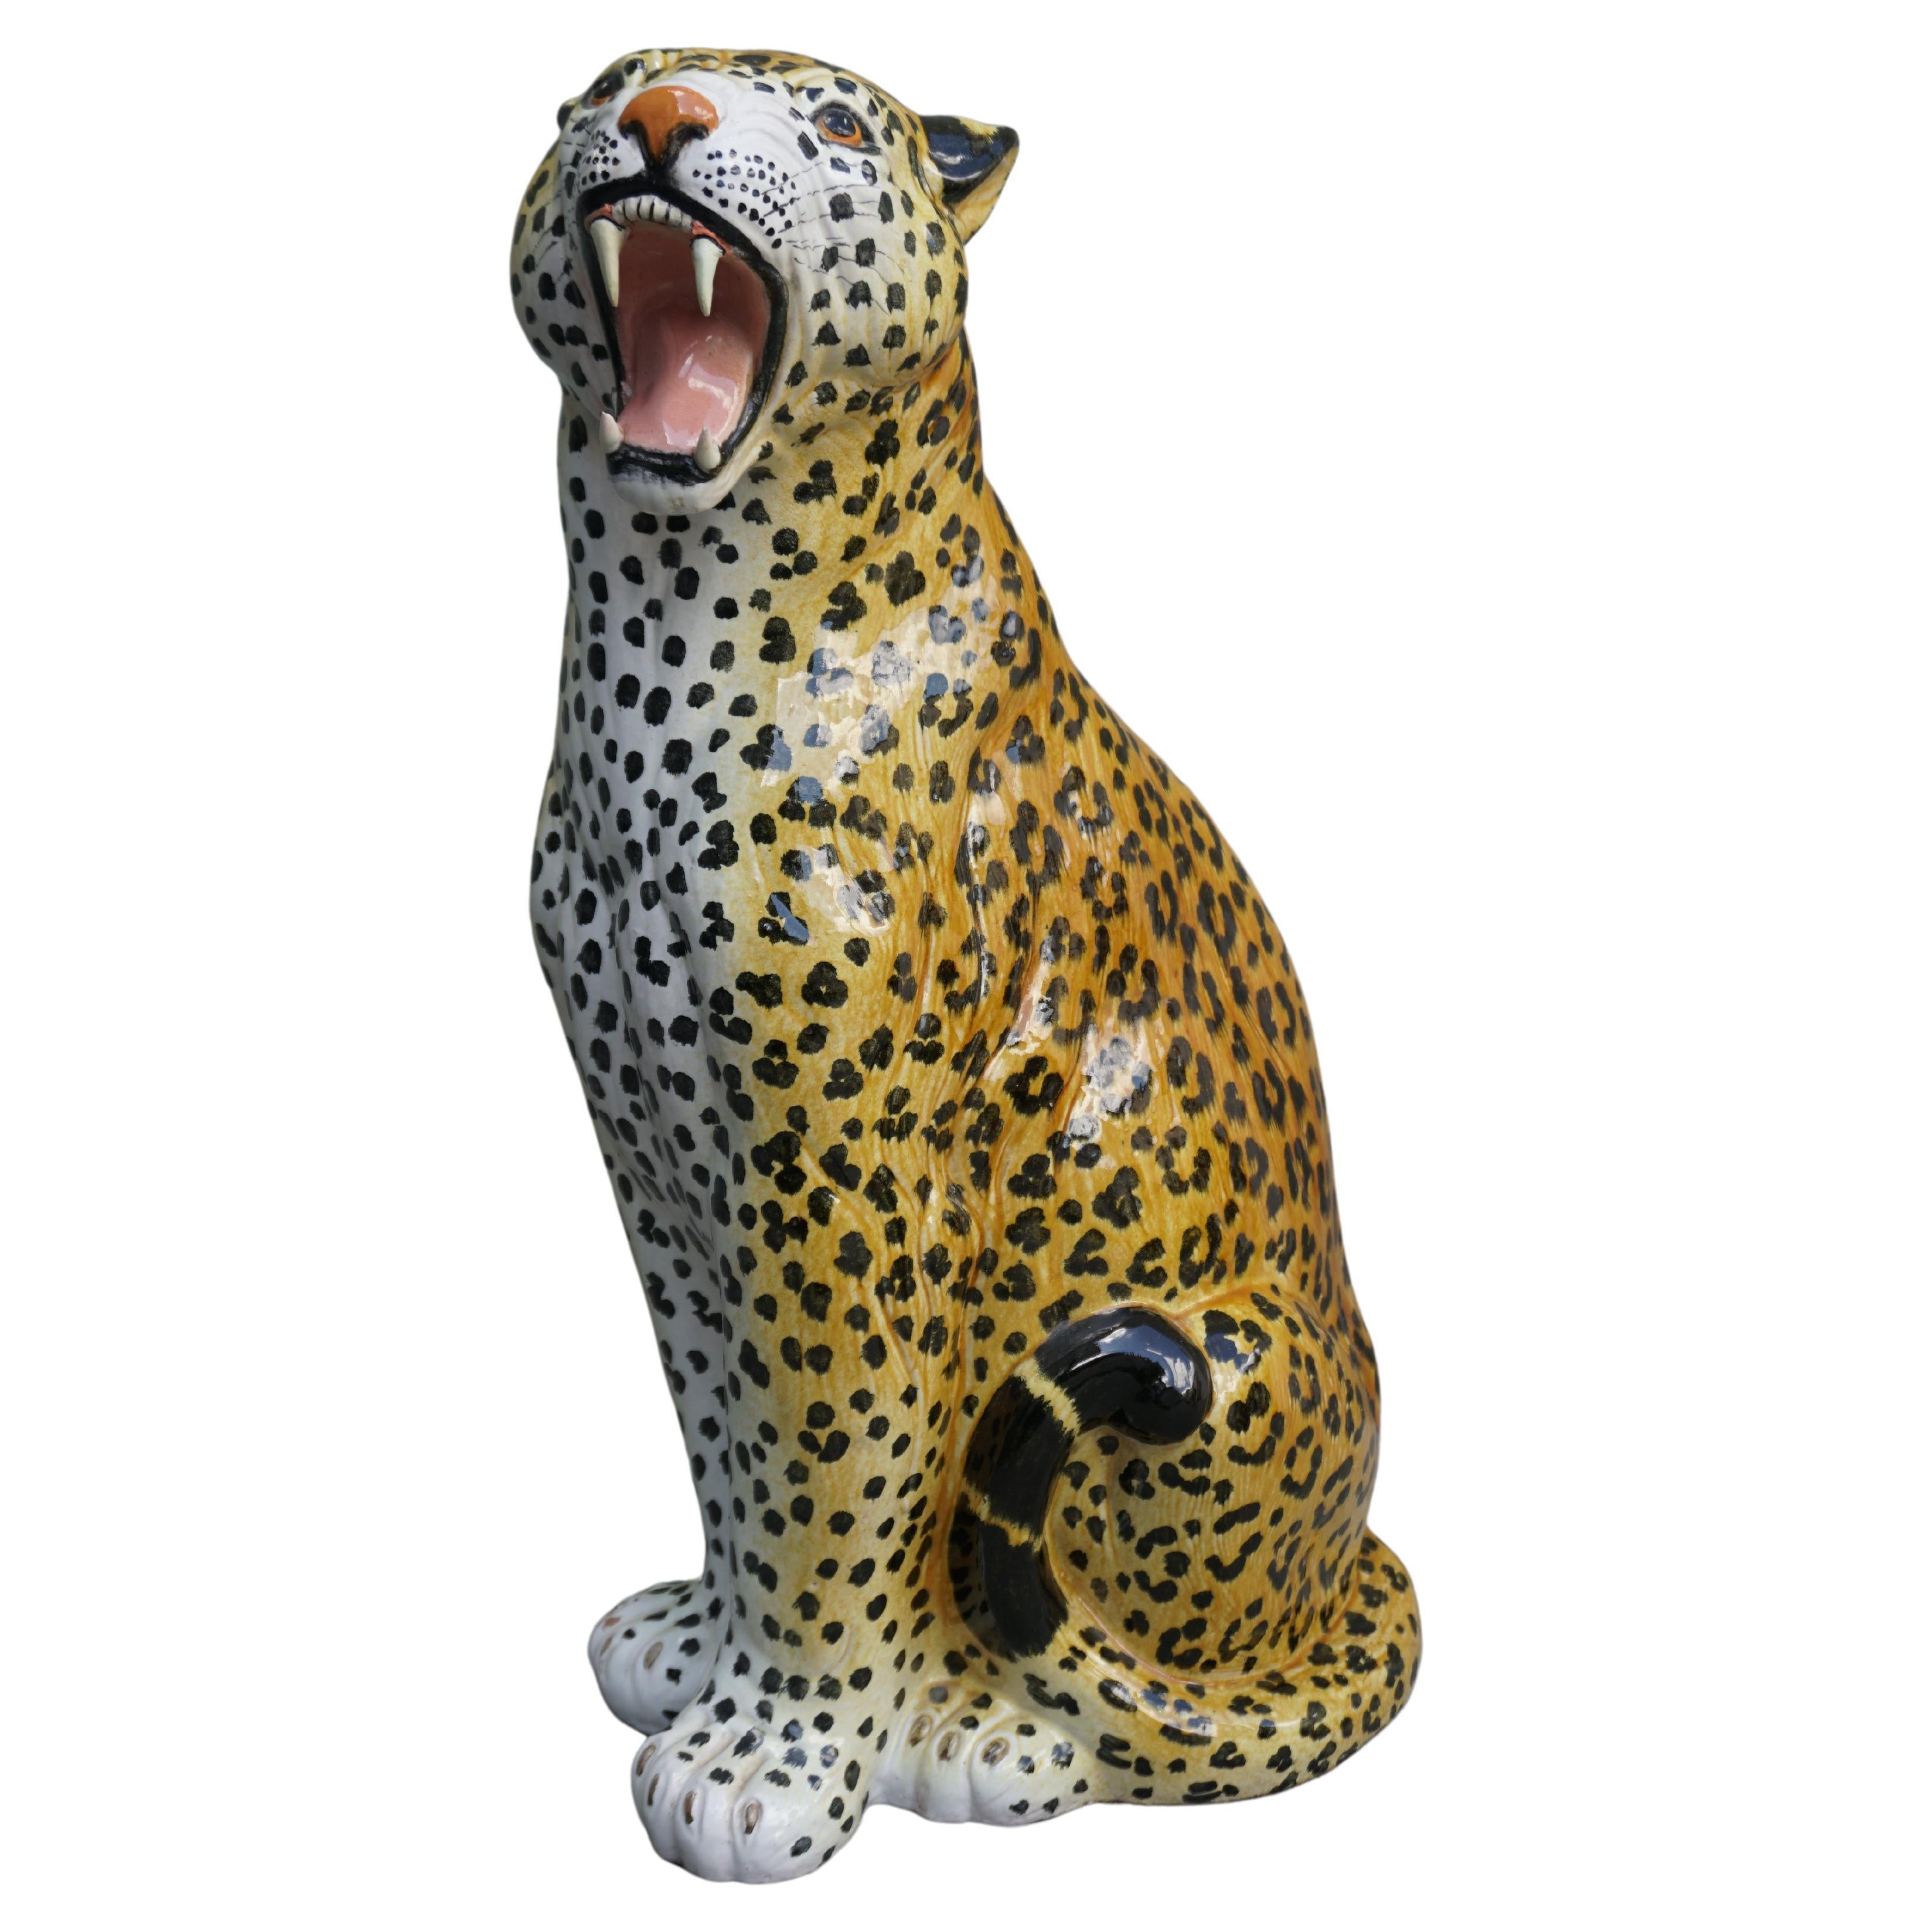 Polyroyal Cheetah Statue Home Decor Leopard Sculpture Resin